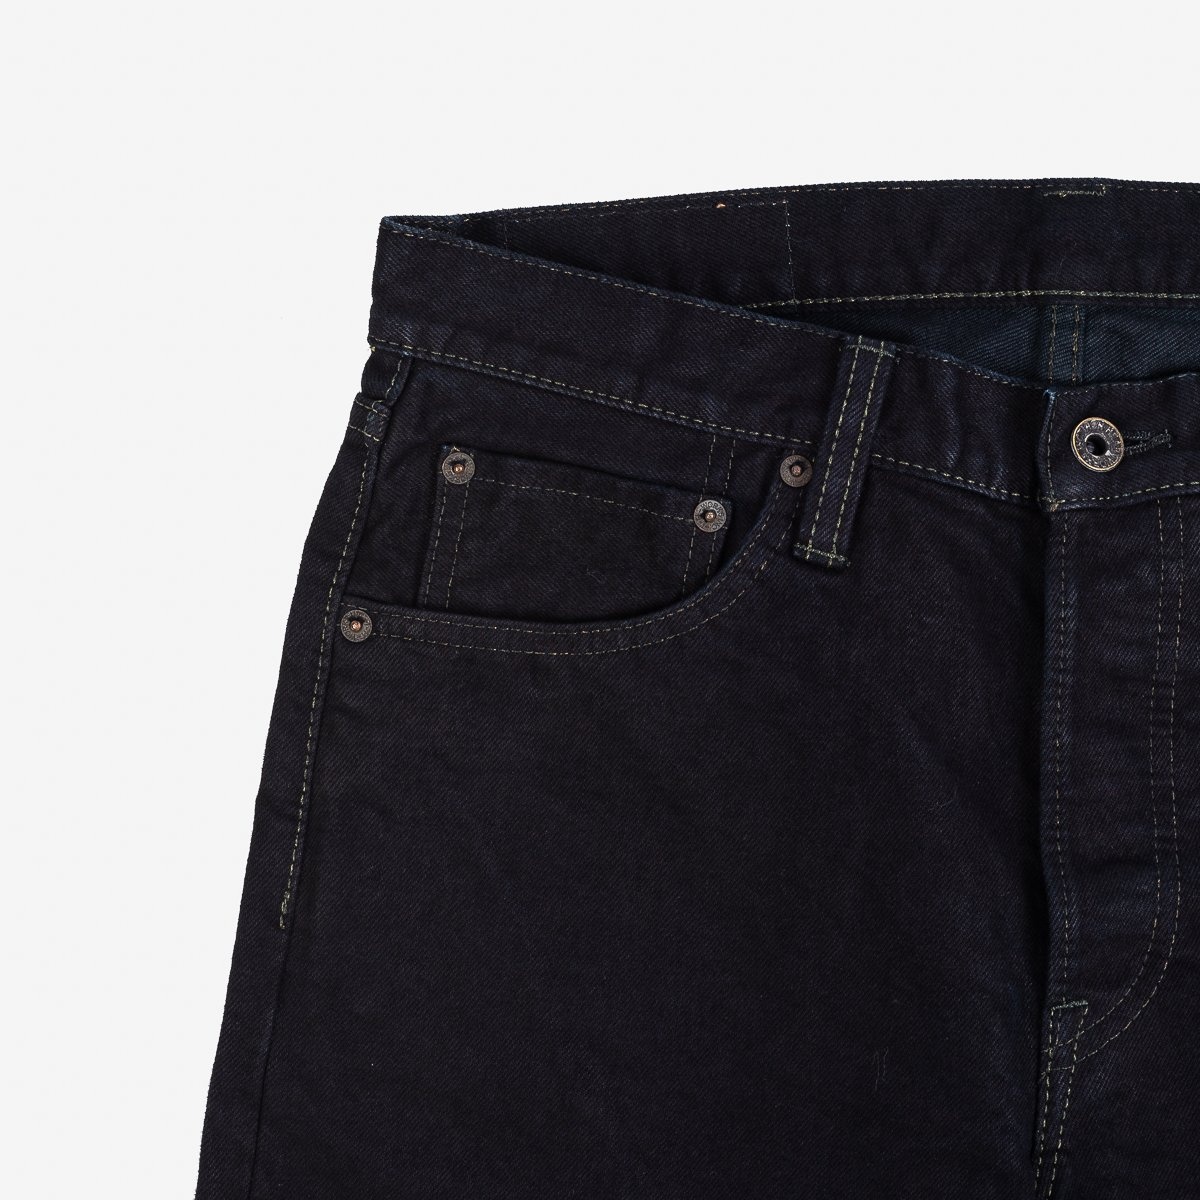 IH-666S-142od 14oz Selvedge Denim Slim Straight Cut Jeans - Indigo Overdyed Black - 6